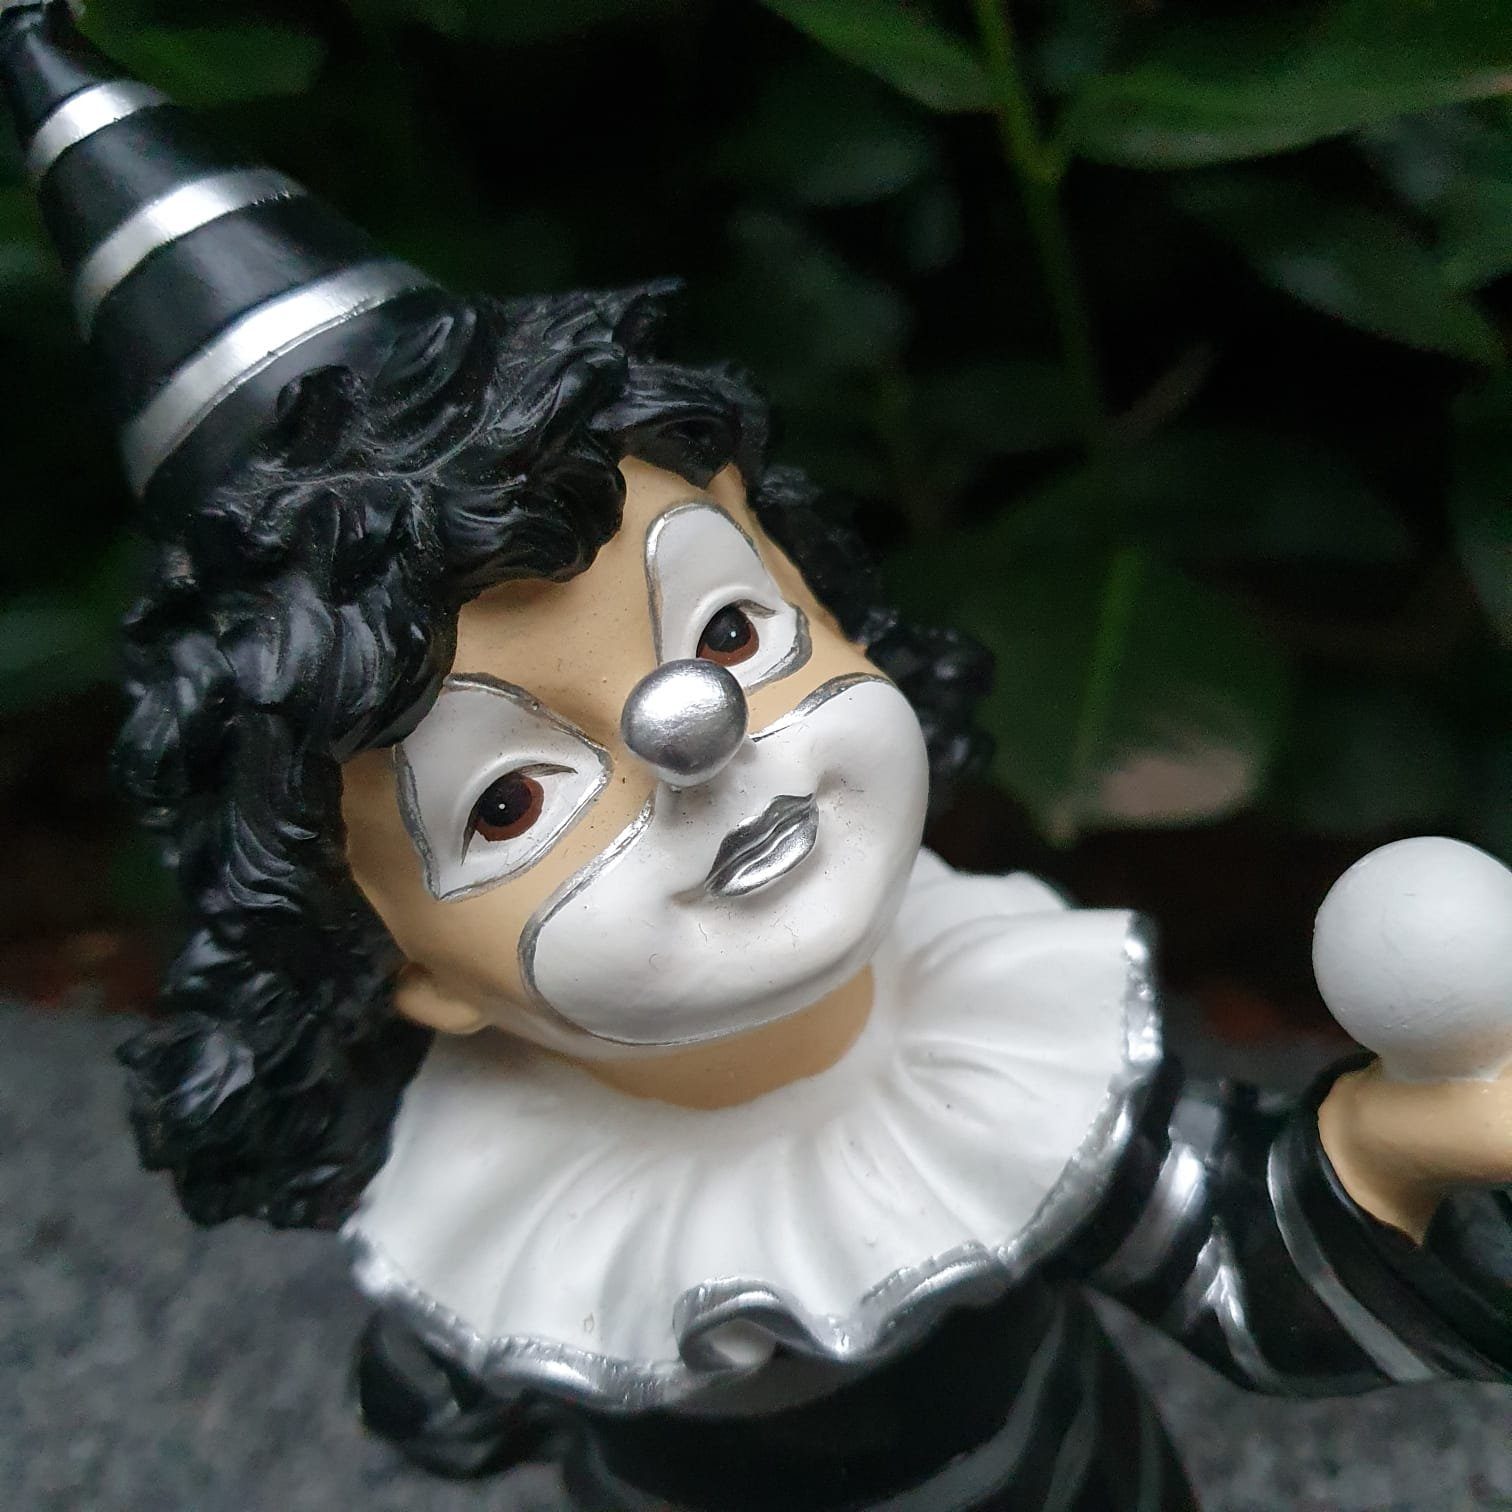 Aspinaworld Gartenfigur Clown cm 22 mit Ball wetterfest